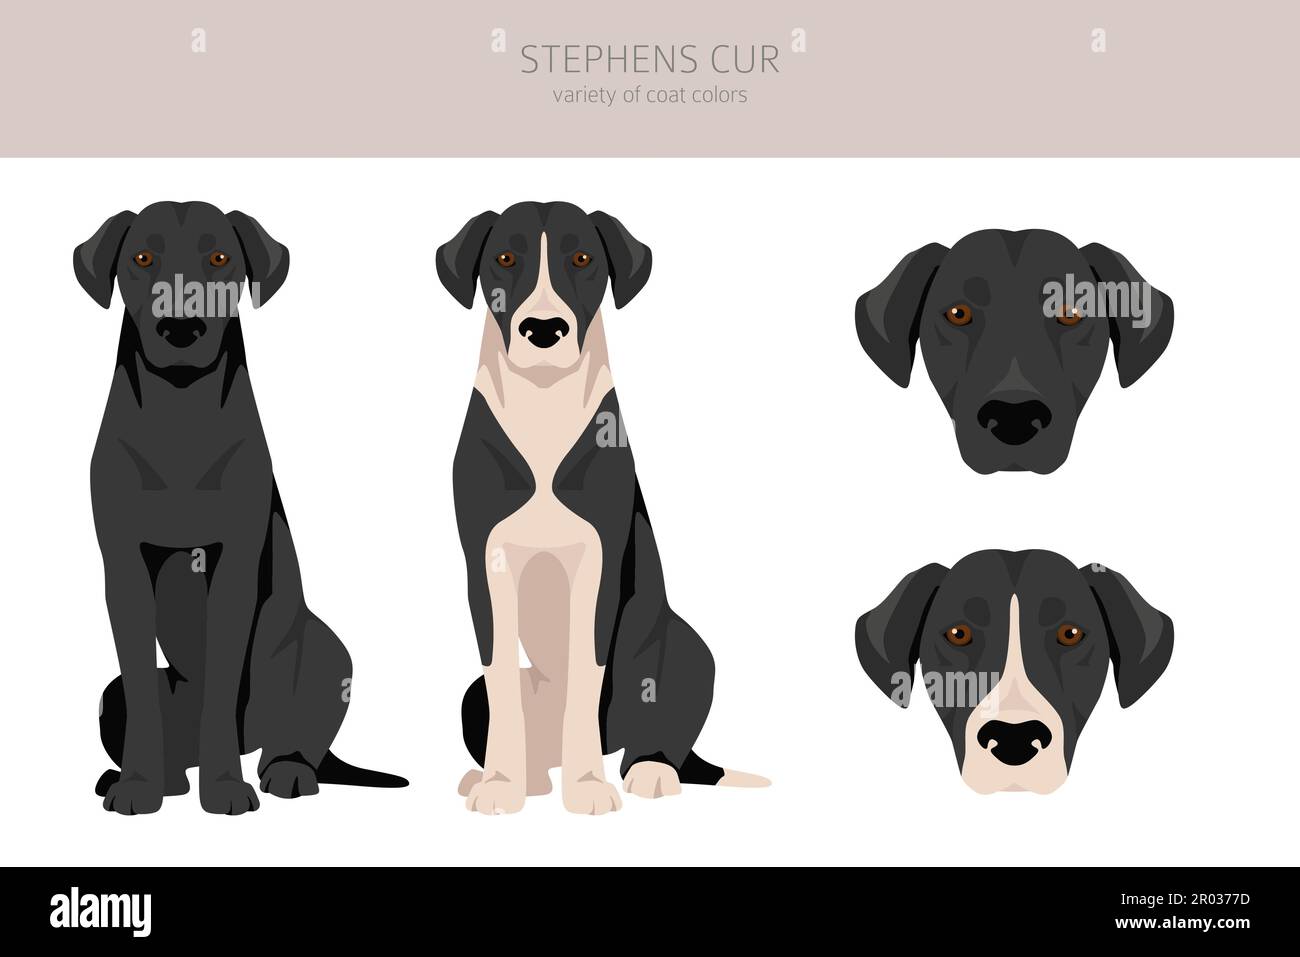 Stephens Cur clipart. All coat colors set. All dog breeds ...